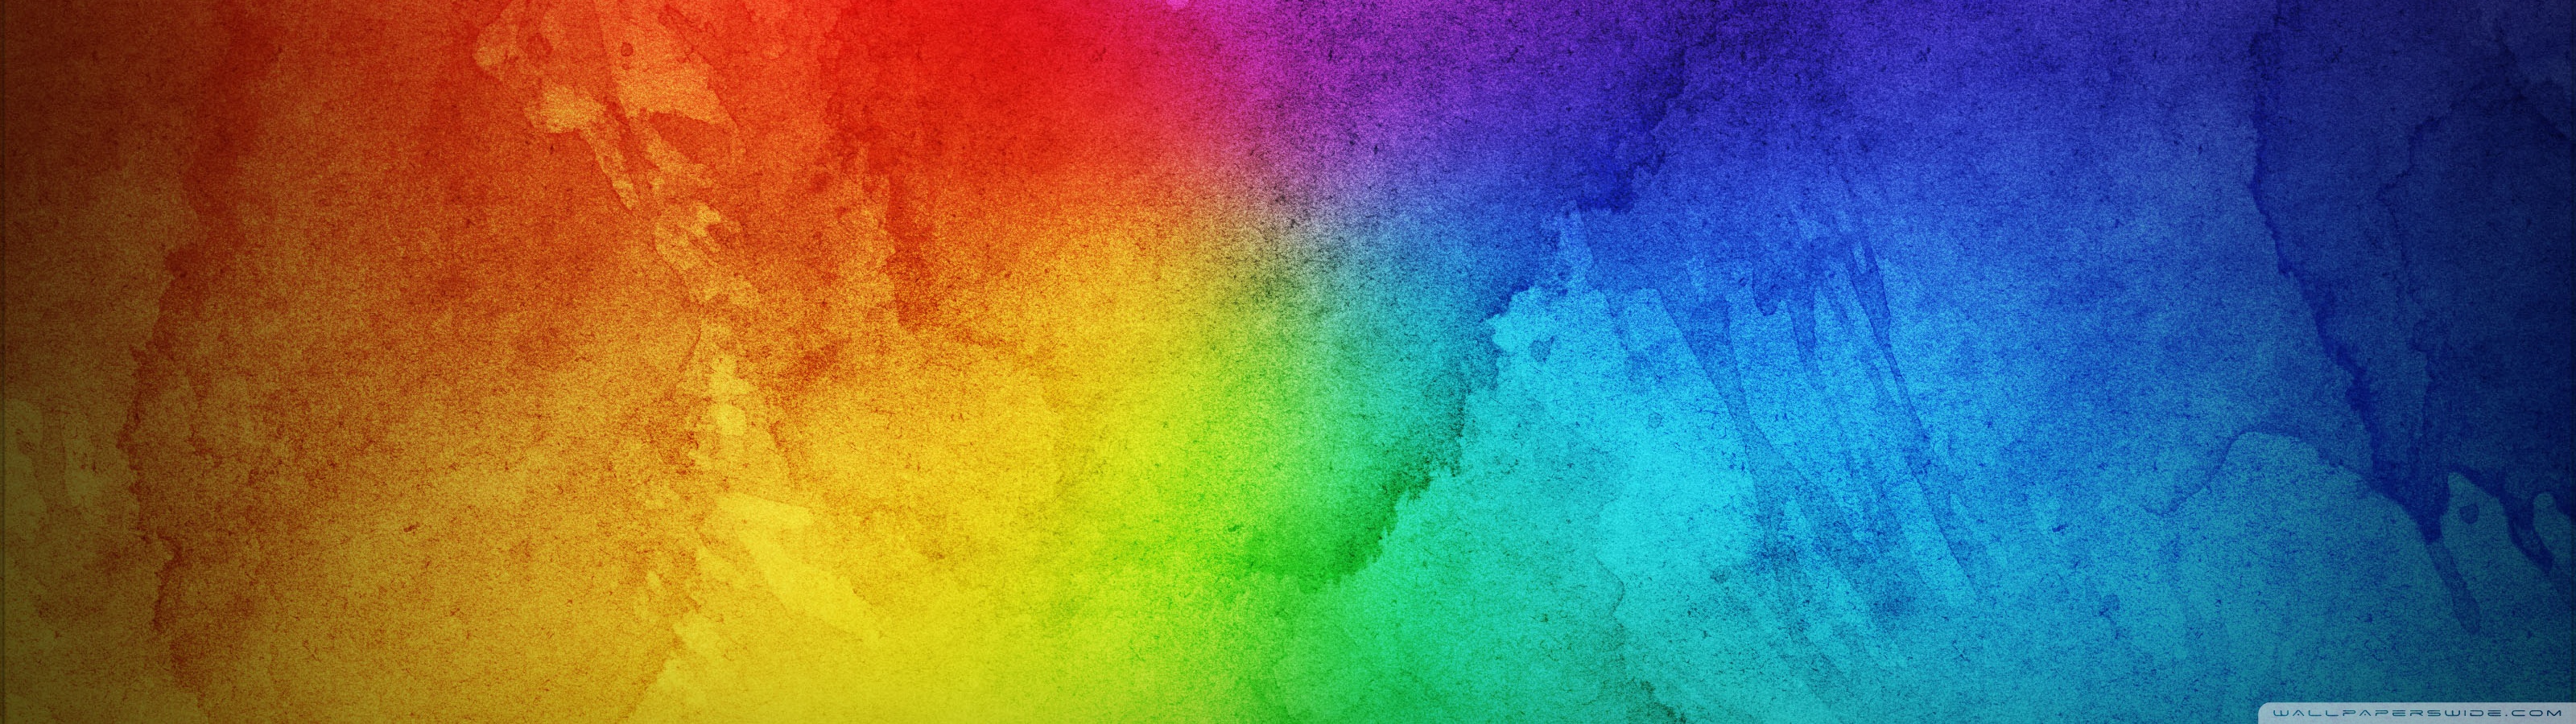 Dual Monitor Wallpaper Rainbow - HD Wallpaper 